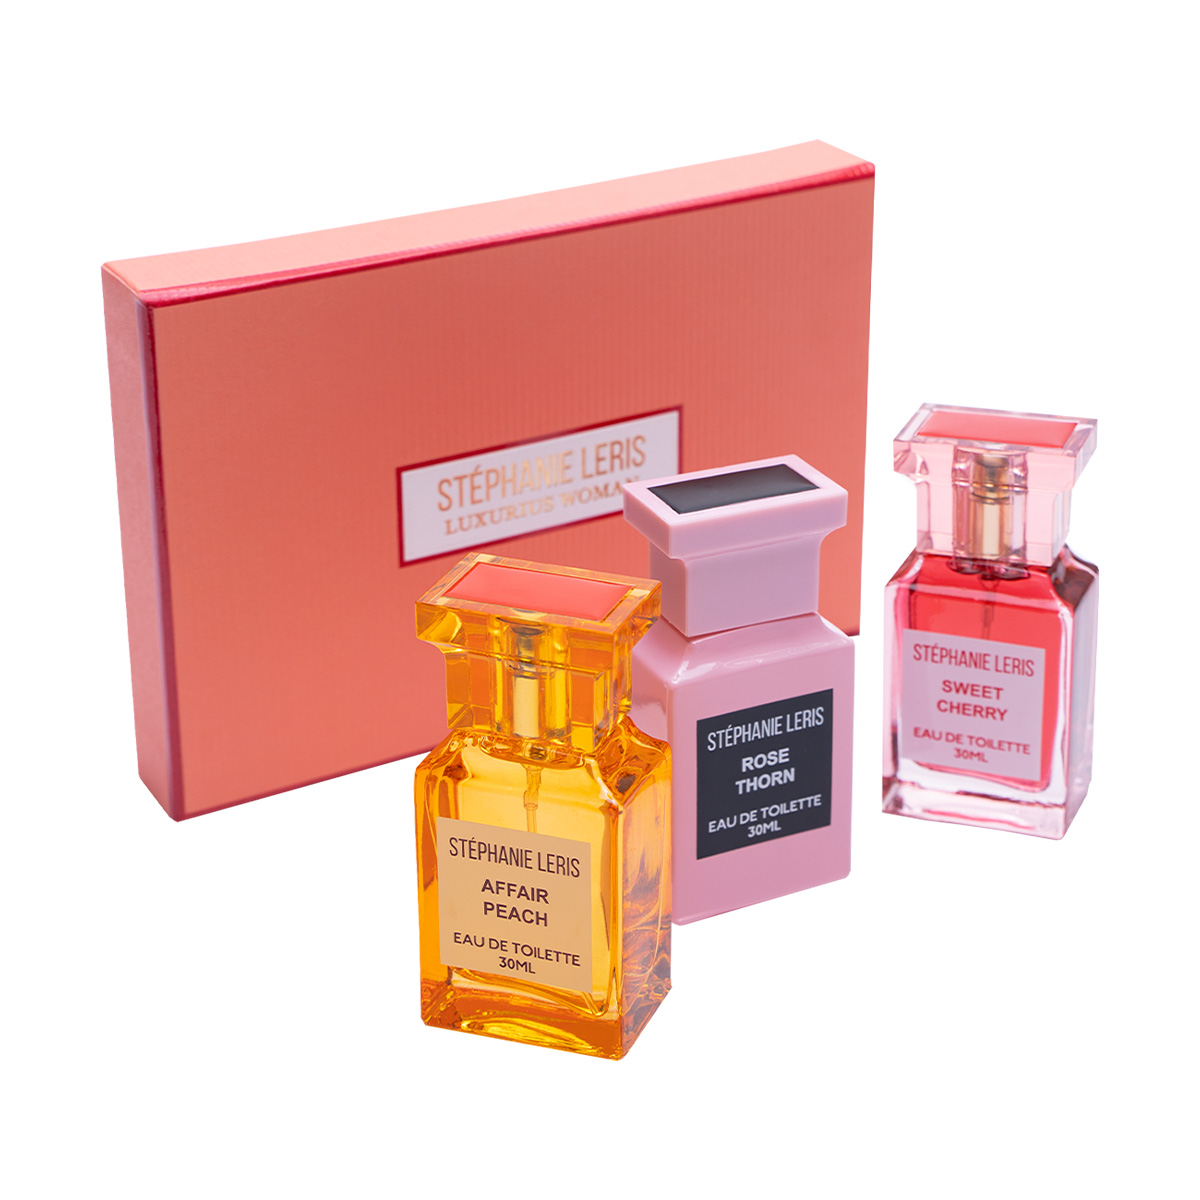 Stephanie Leris Luxurious Woman, набор женского парфюма 3 в 1 (3 шт. по 30 мл), Парфюмерия, Наборы парфюмированные